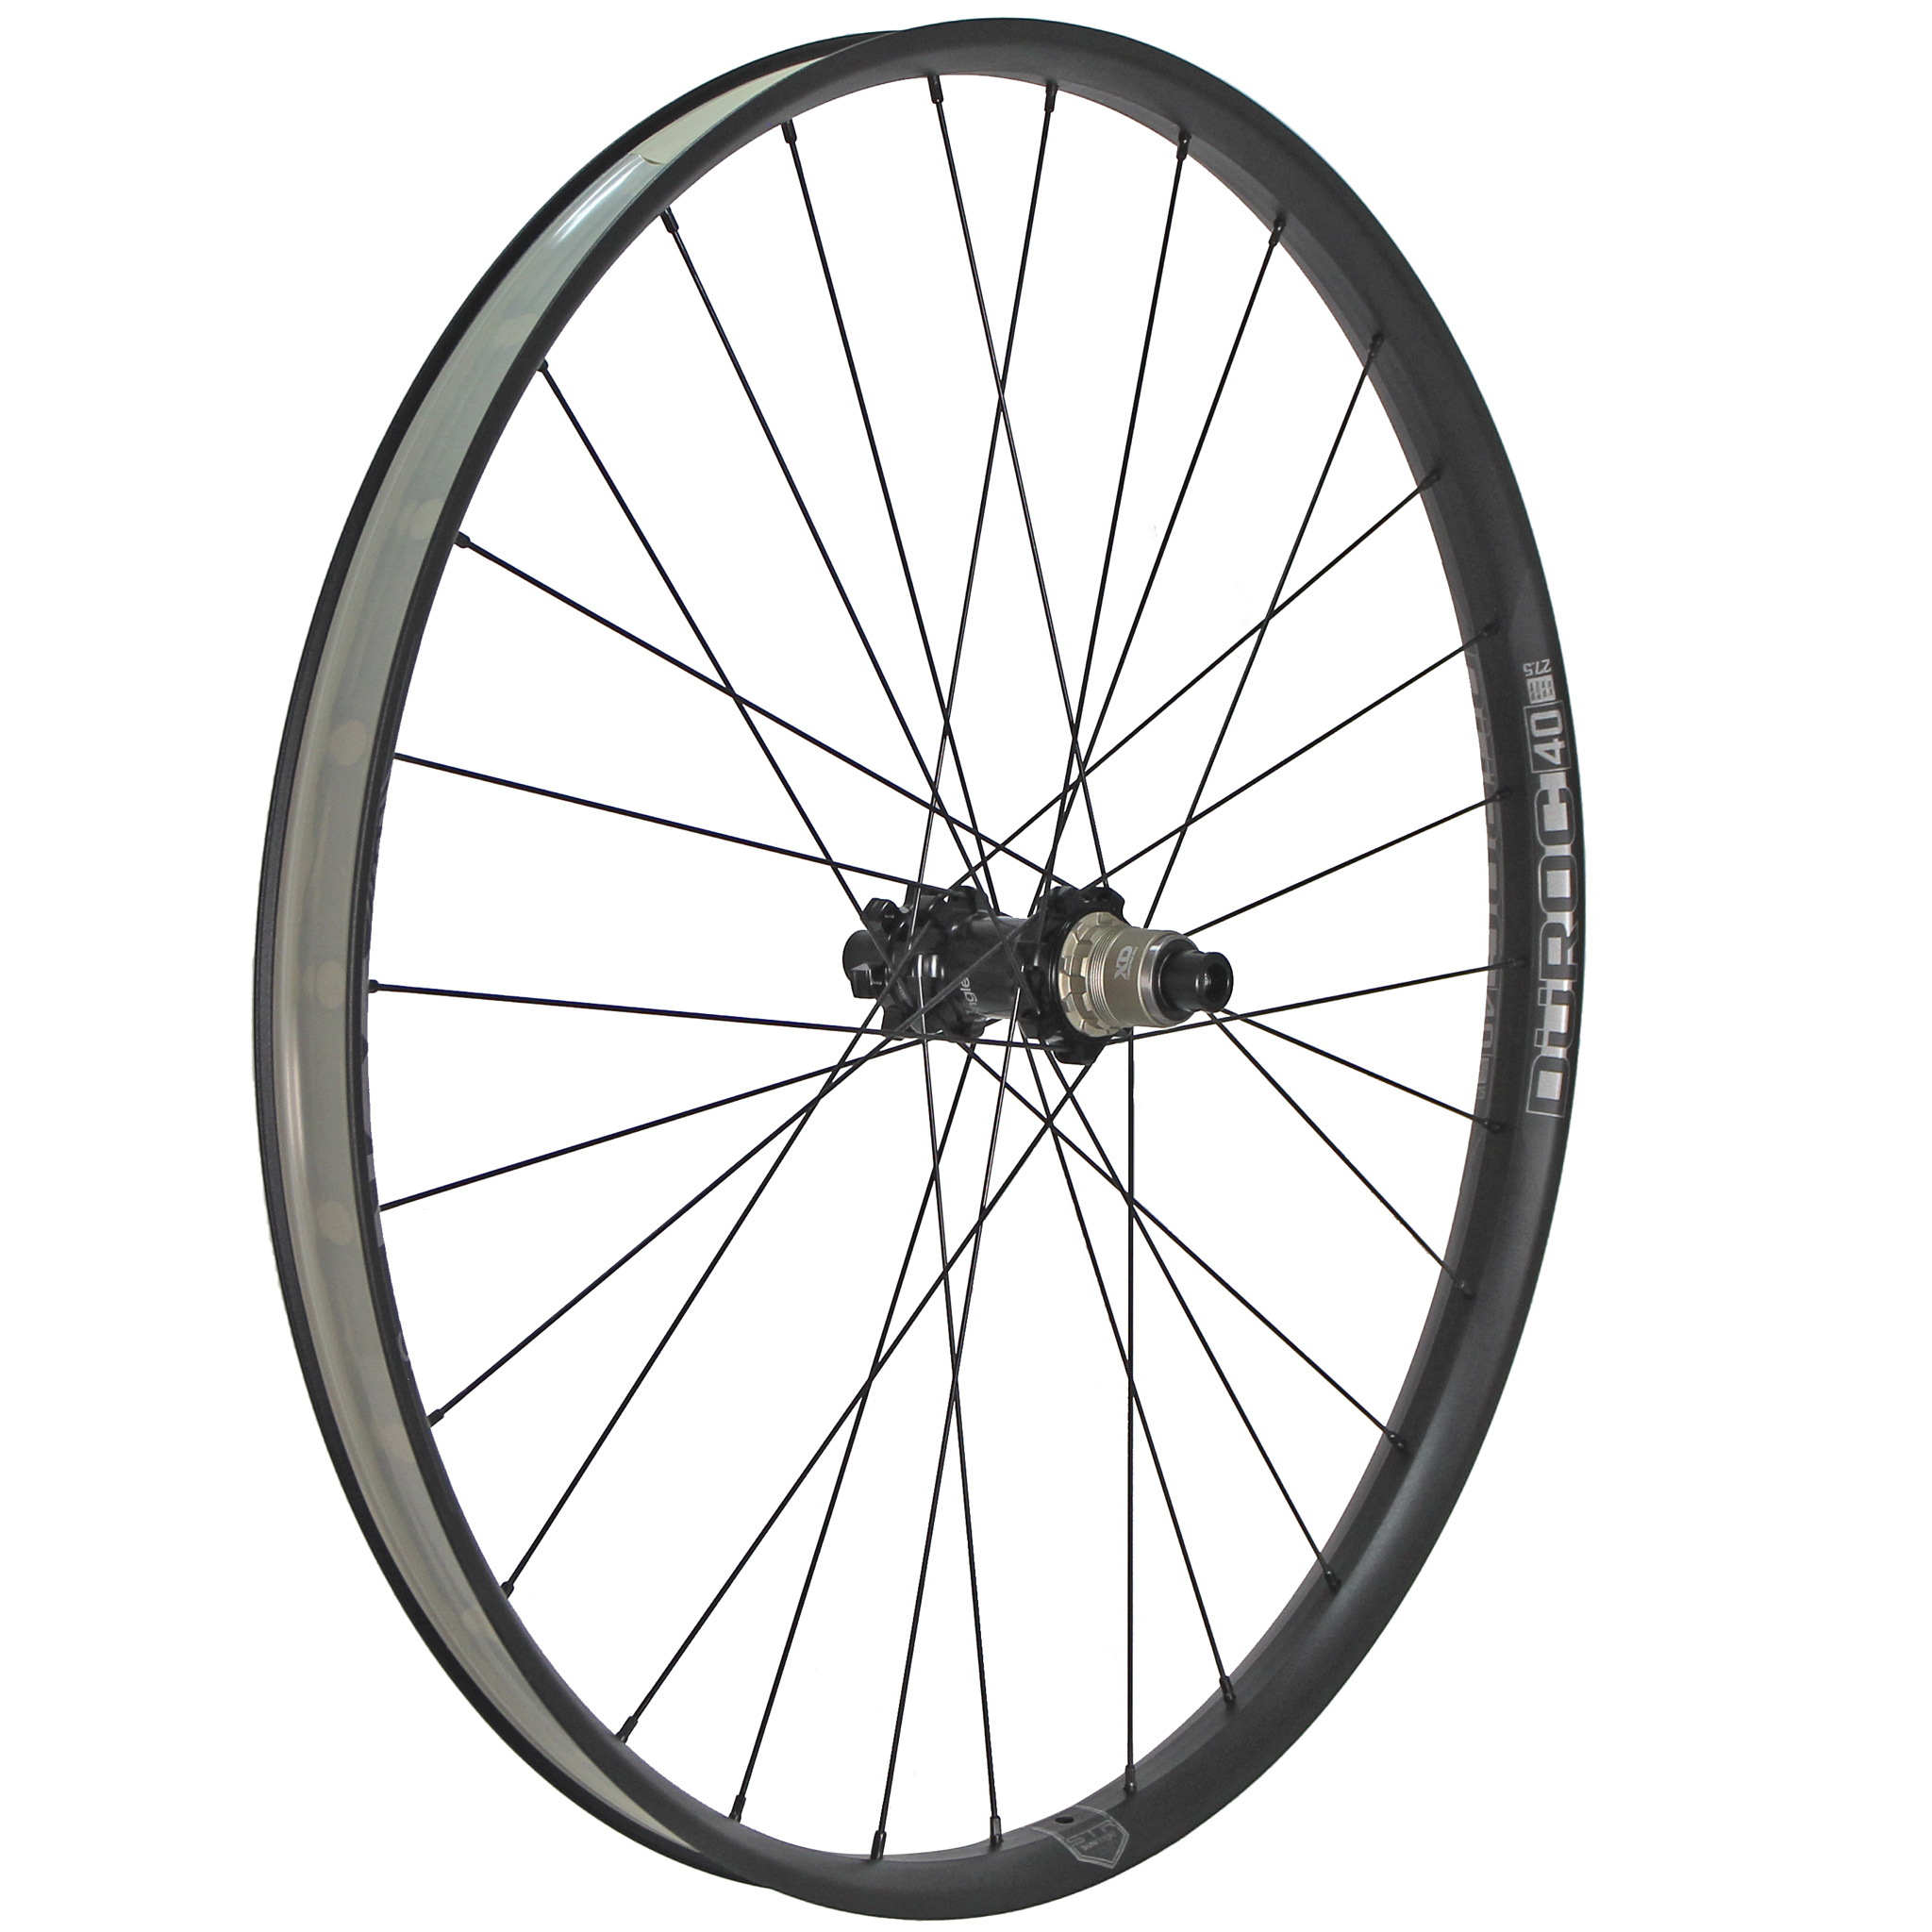 SunRingle Duroc 40 Expert 27.5" Rear Wheel (XD/MS) 148x12  Black